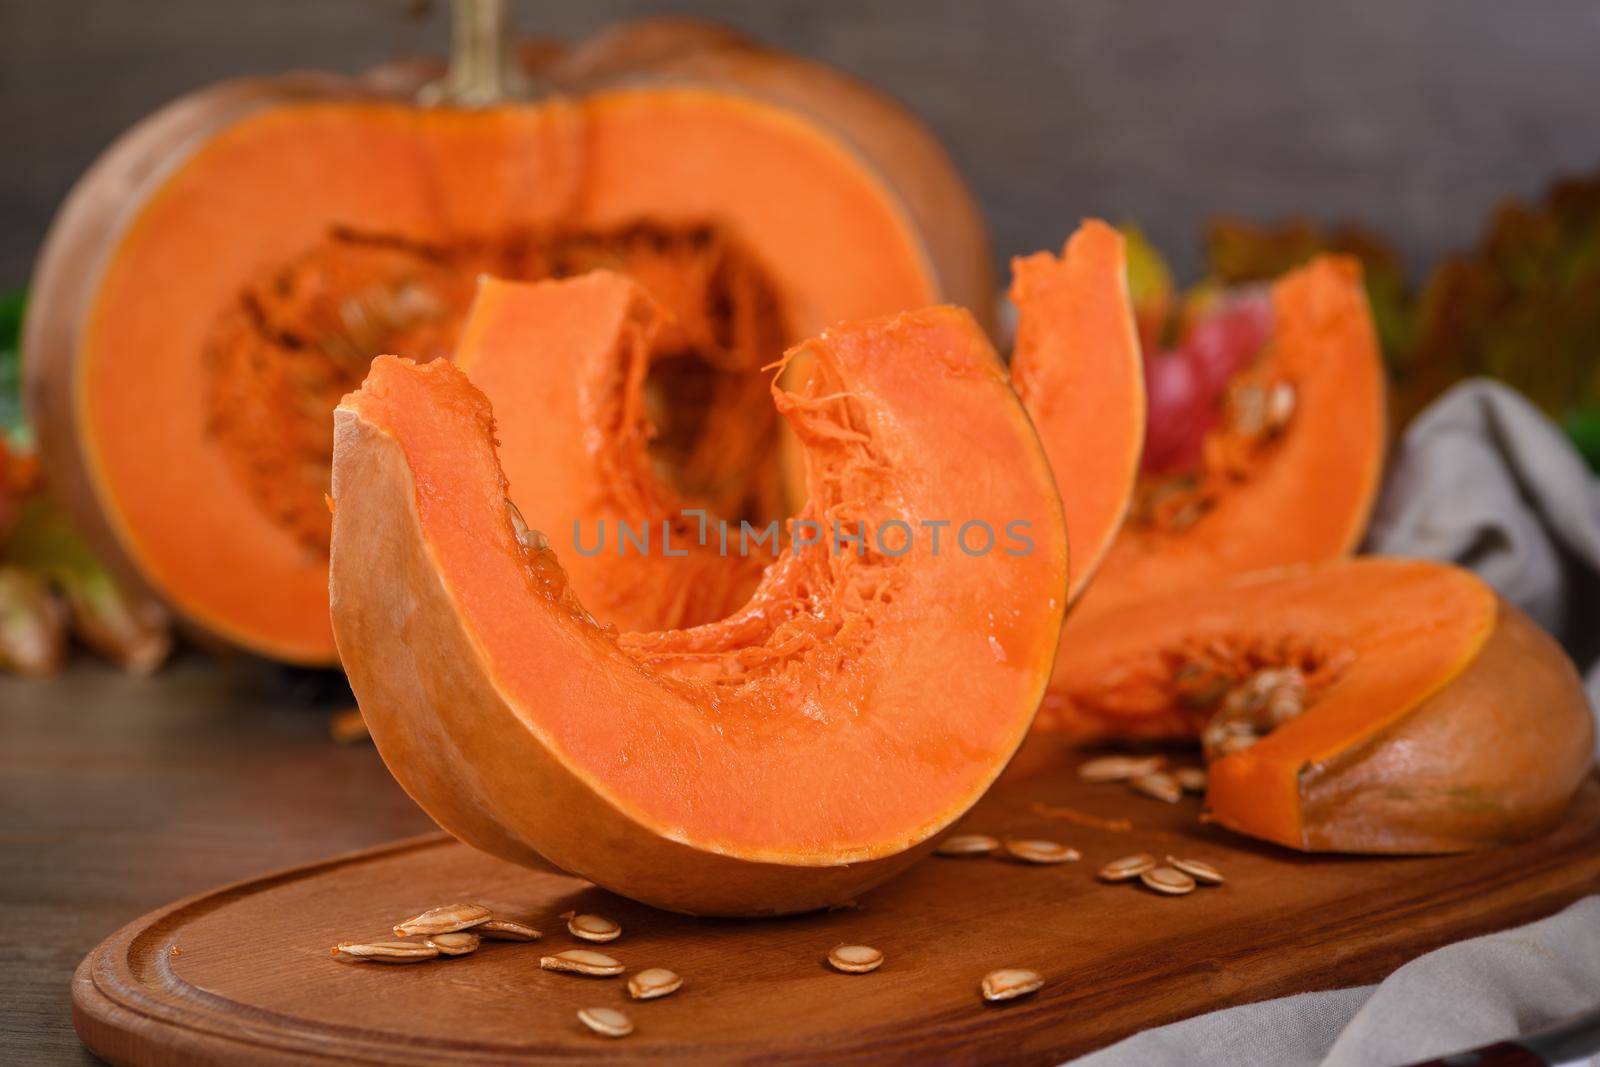 Whole fresh orange big pumpkin and slice of pumpkin on wooden board, closeup. Organic vegetable product, ingredients for cooking, healthy food vegan